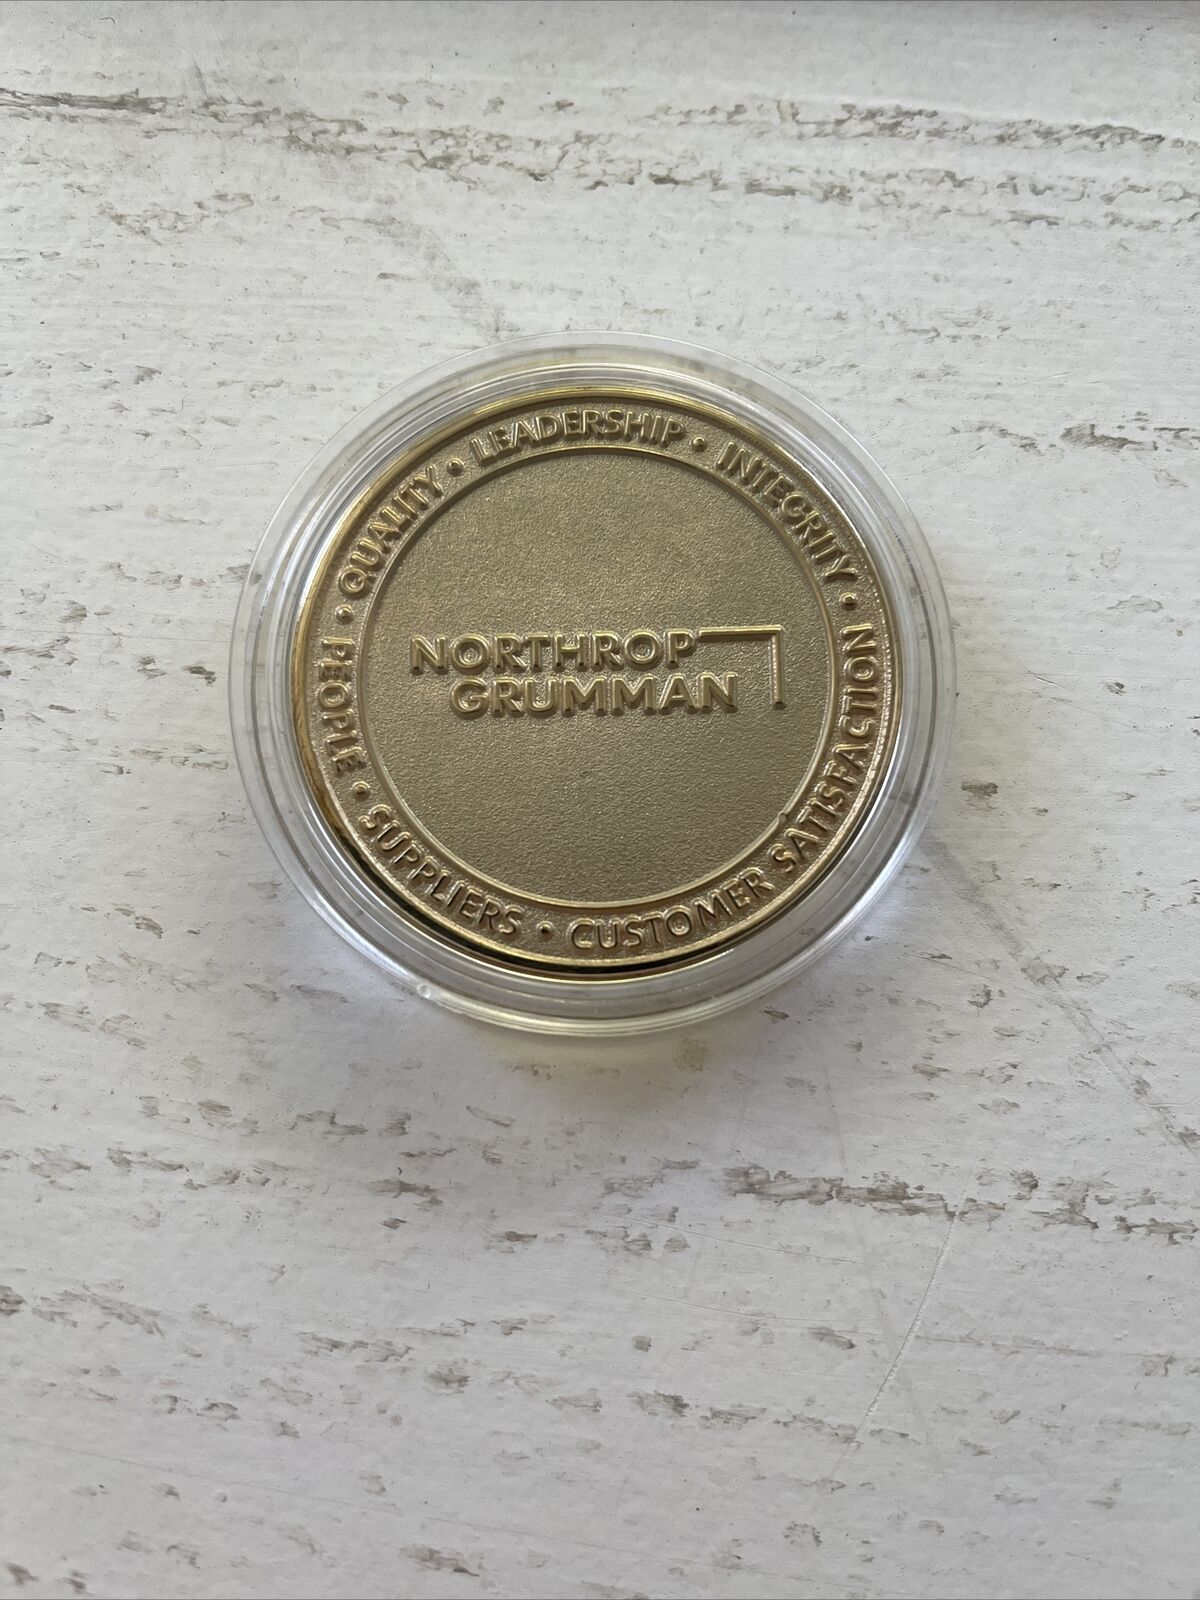 NEW Northrop grumman coin